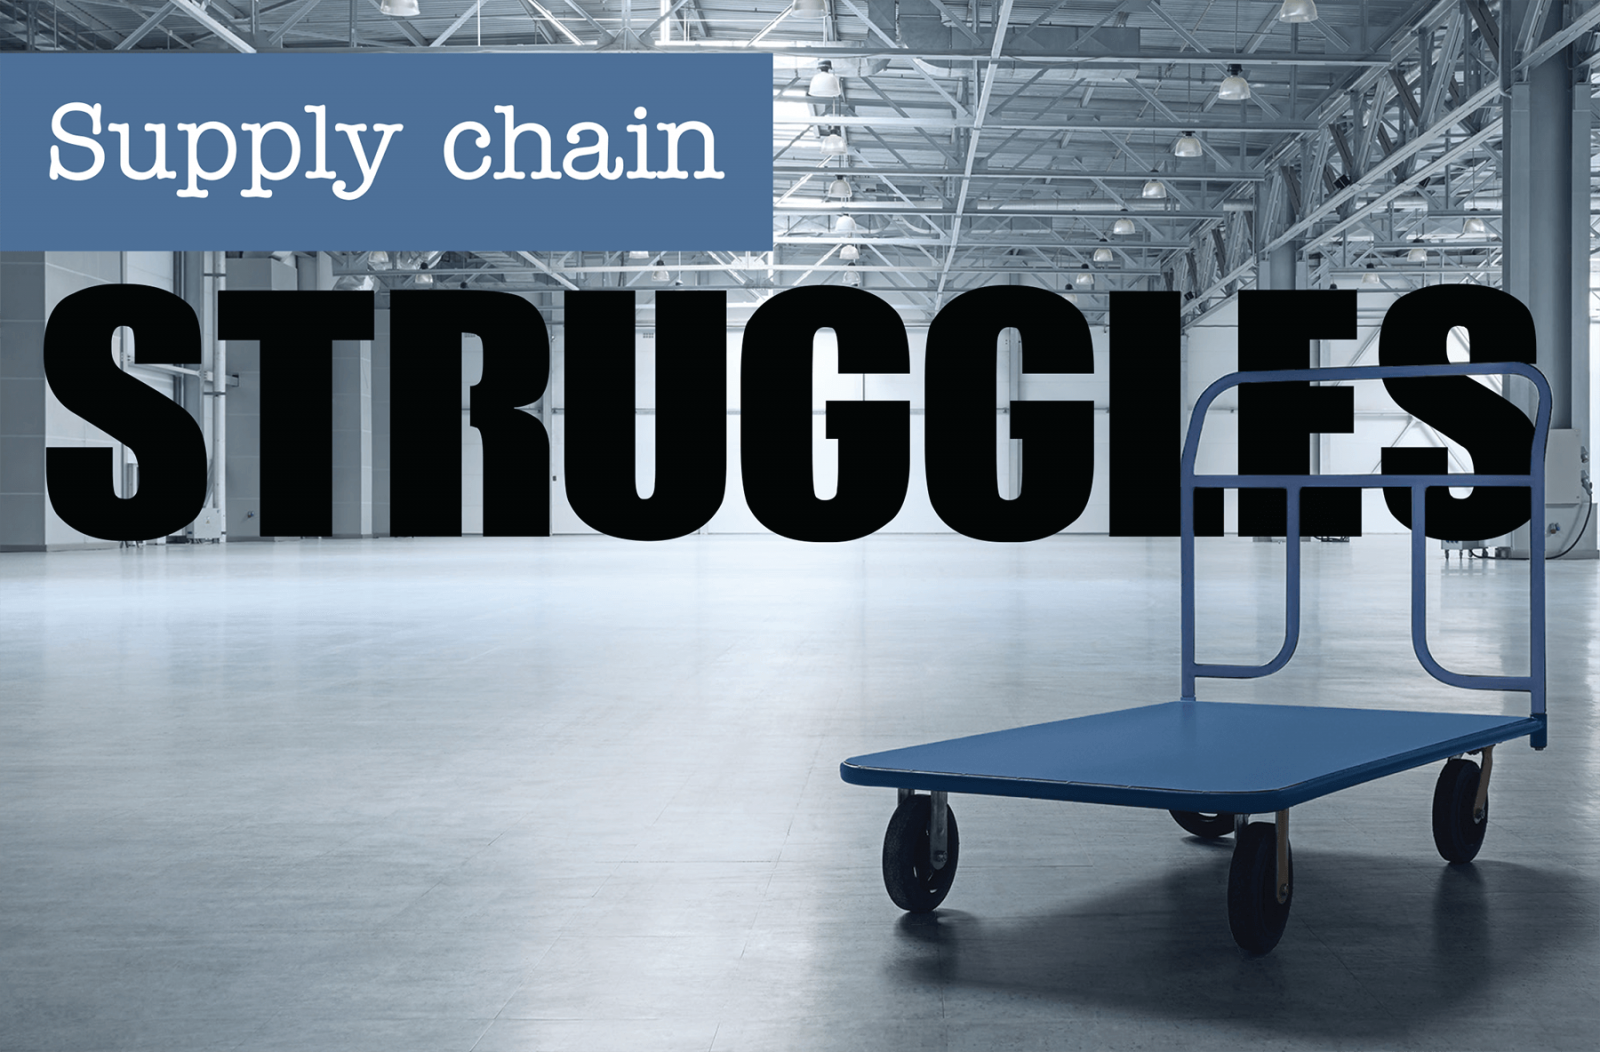 Supply chain struggles